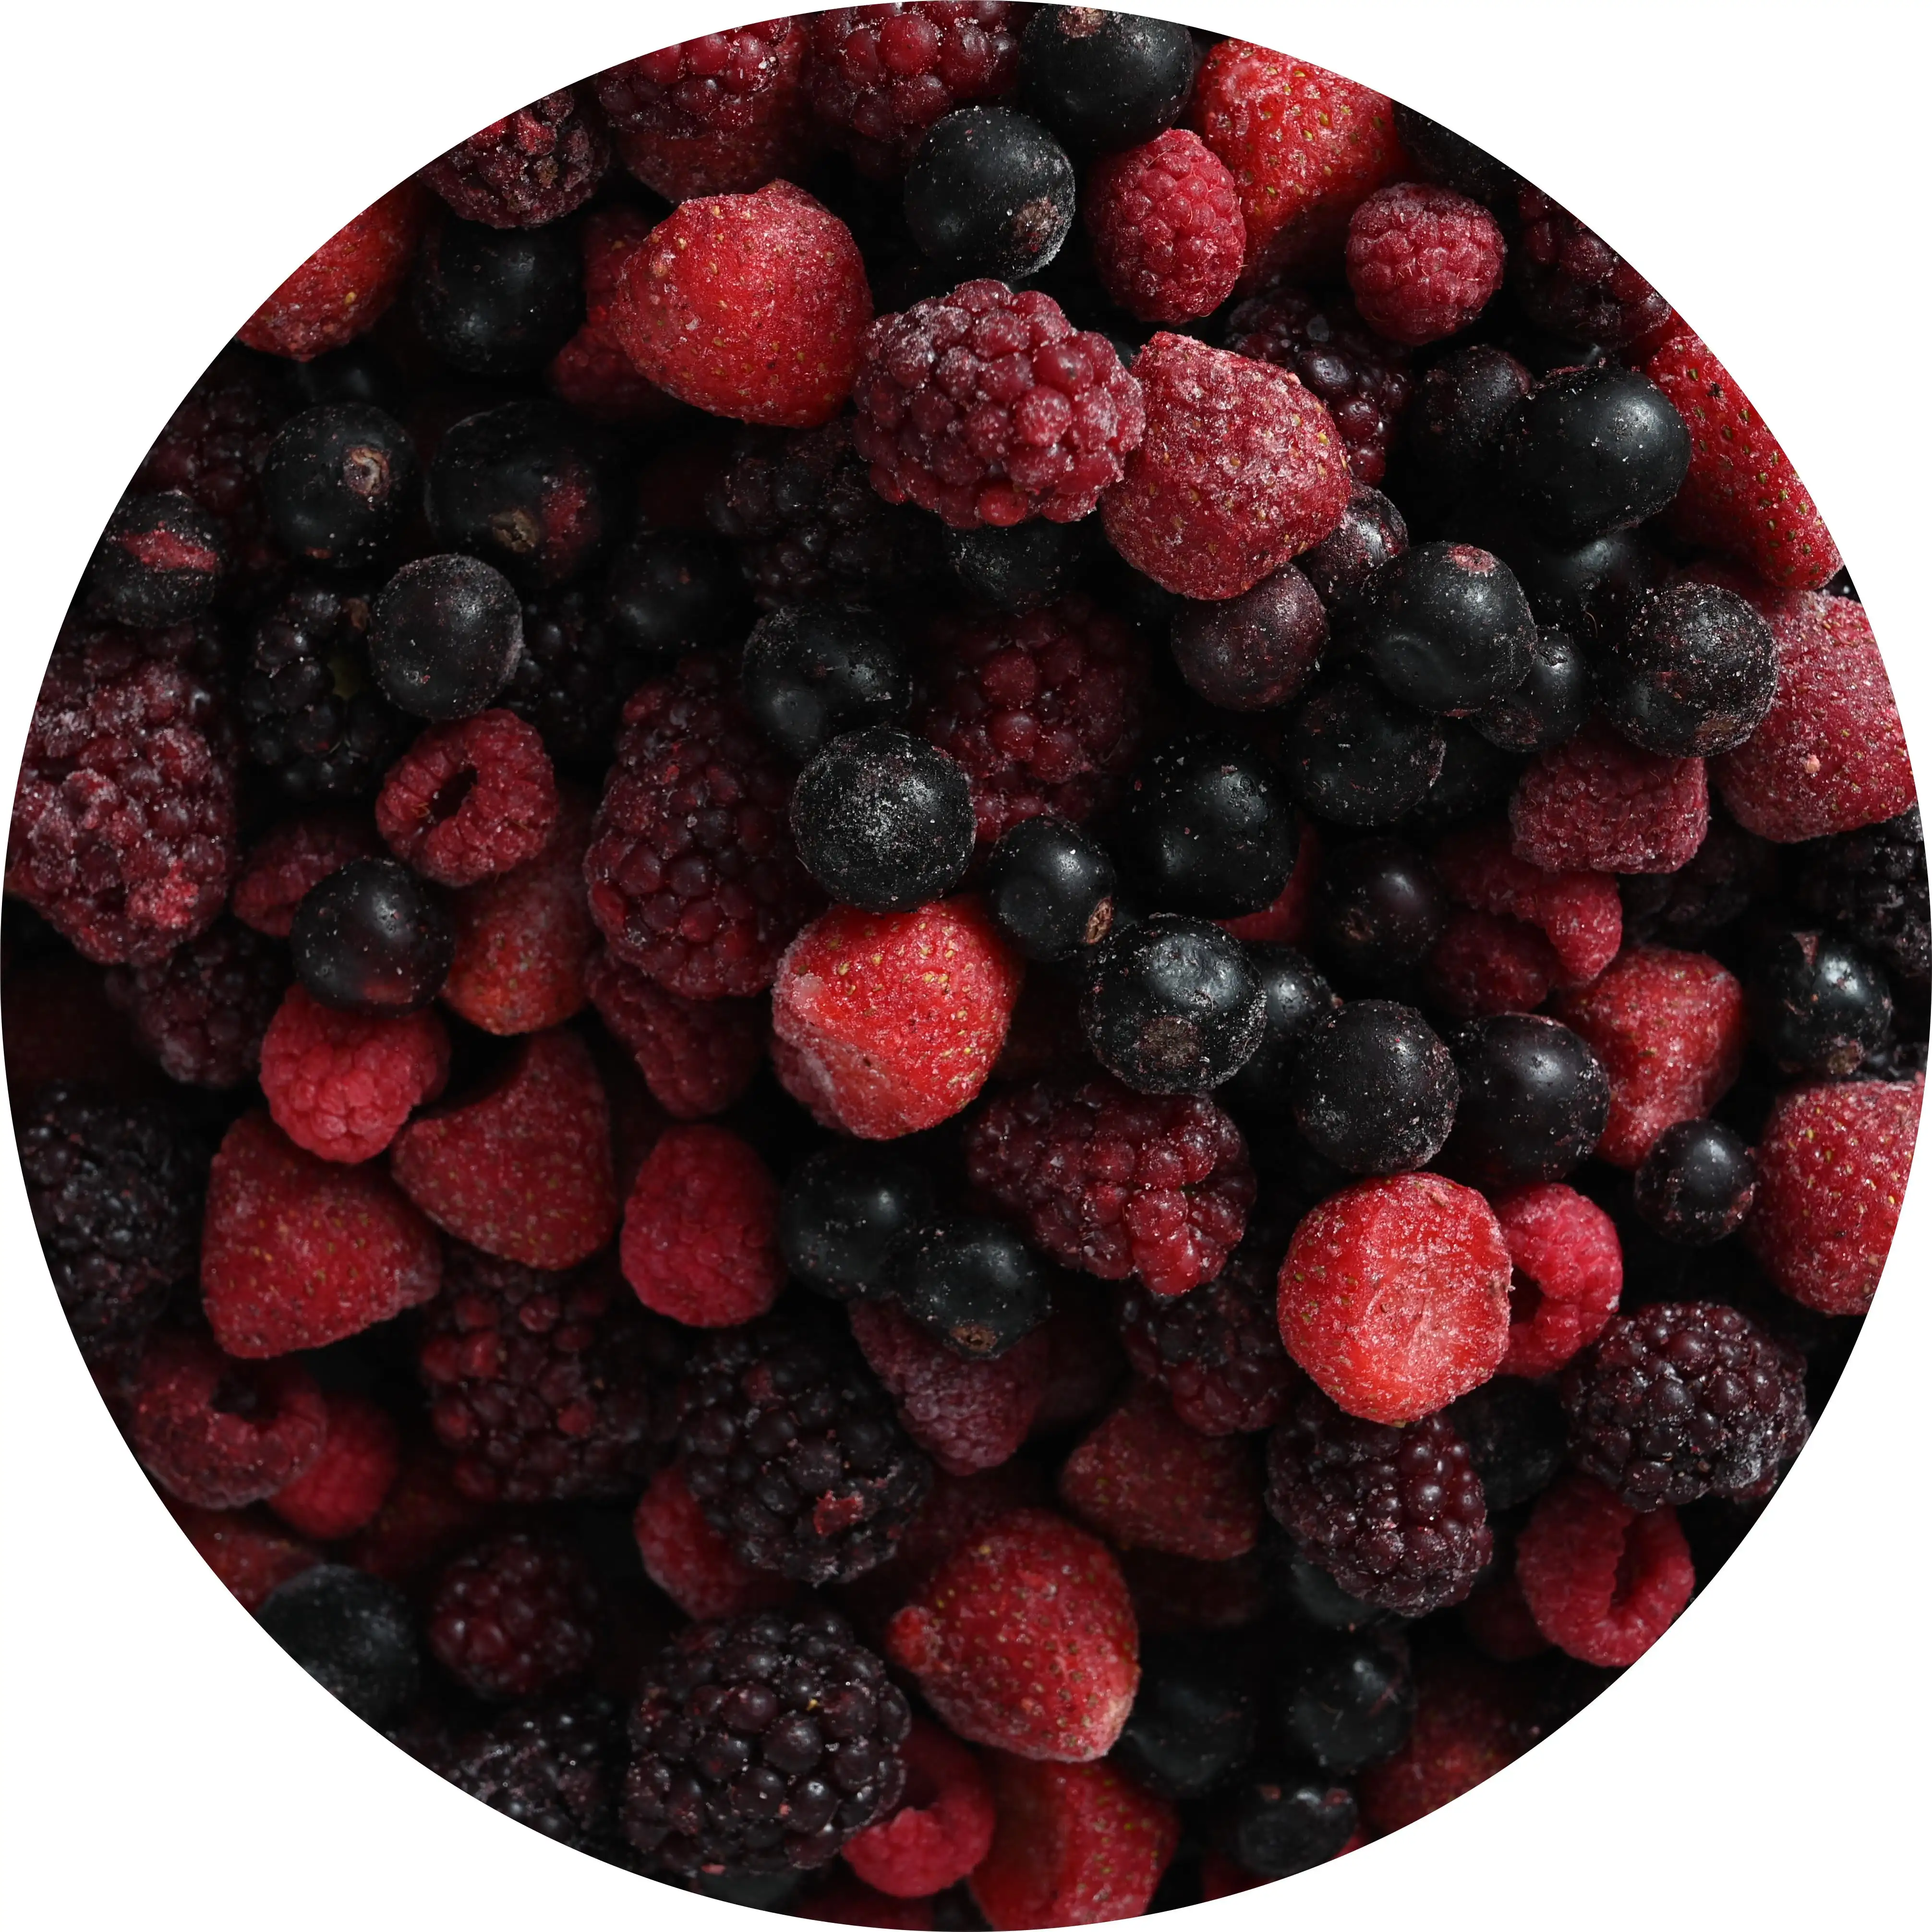 Wanda Foods Factory direct export wholesale frozen mixed berries Contains blackberries blueberries and strawberries